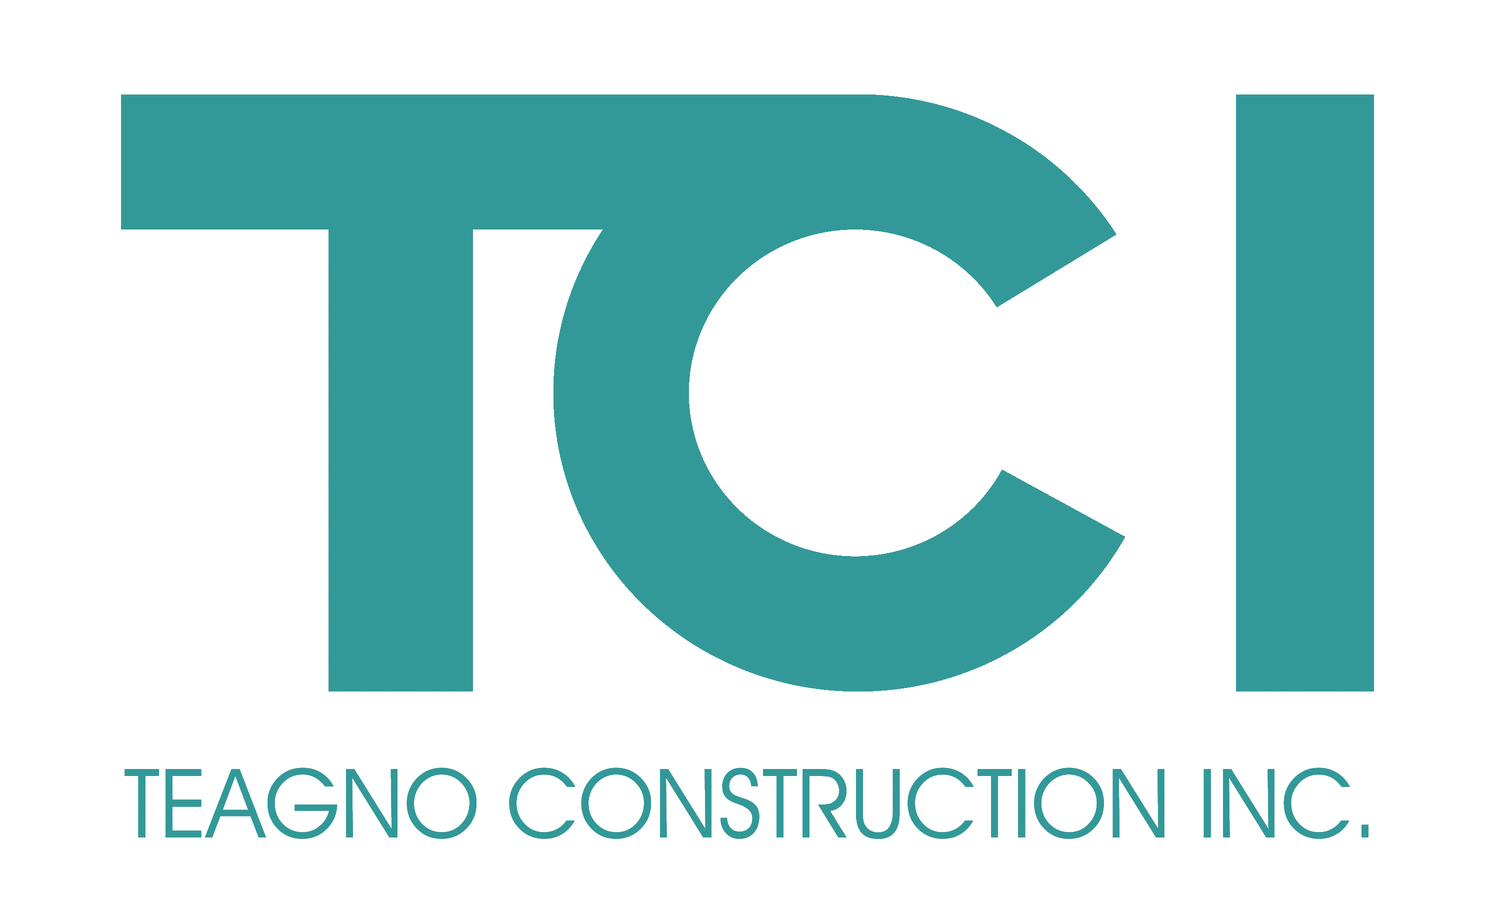 Teagno Construction Inc.